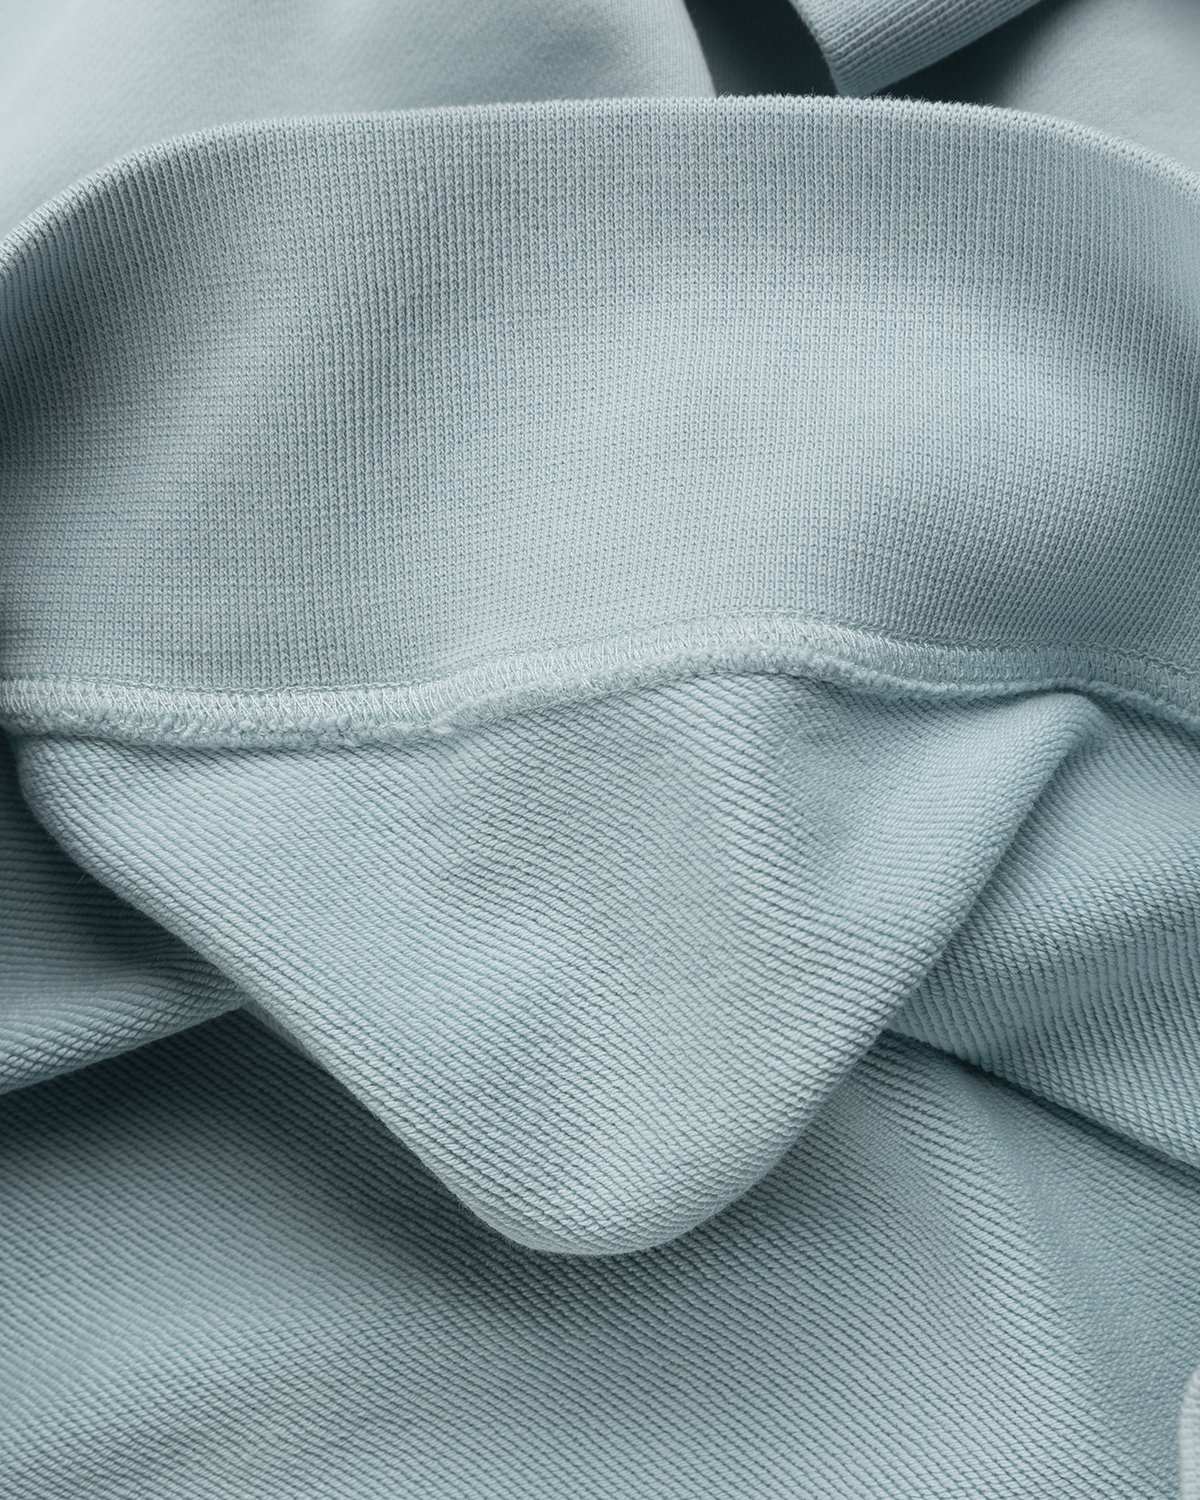 Stone Island - 63051 Garment-Dyed Cotton Fleece Crewneck Aqua - Clothing - Blue - Image 6